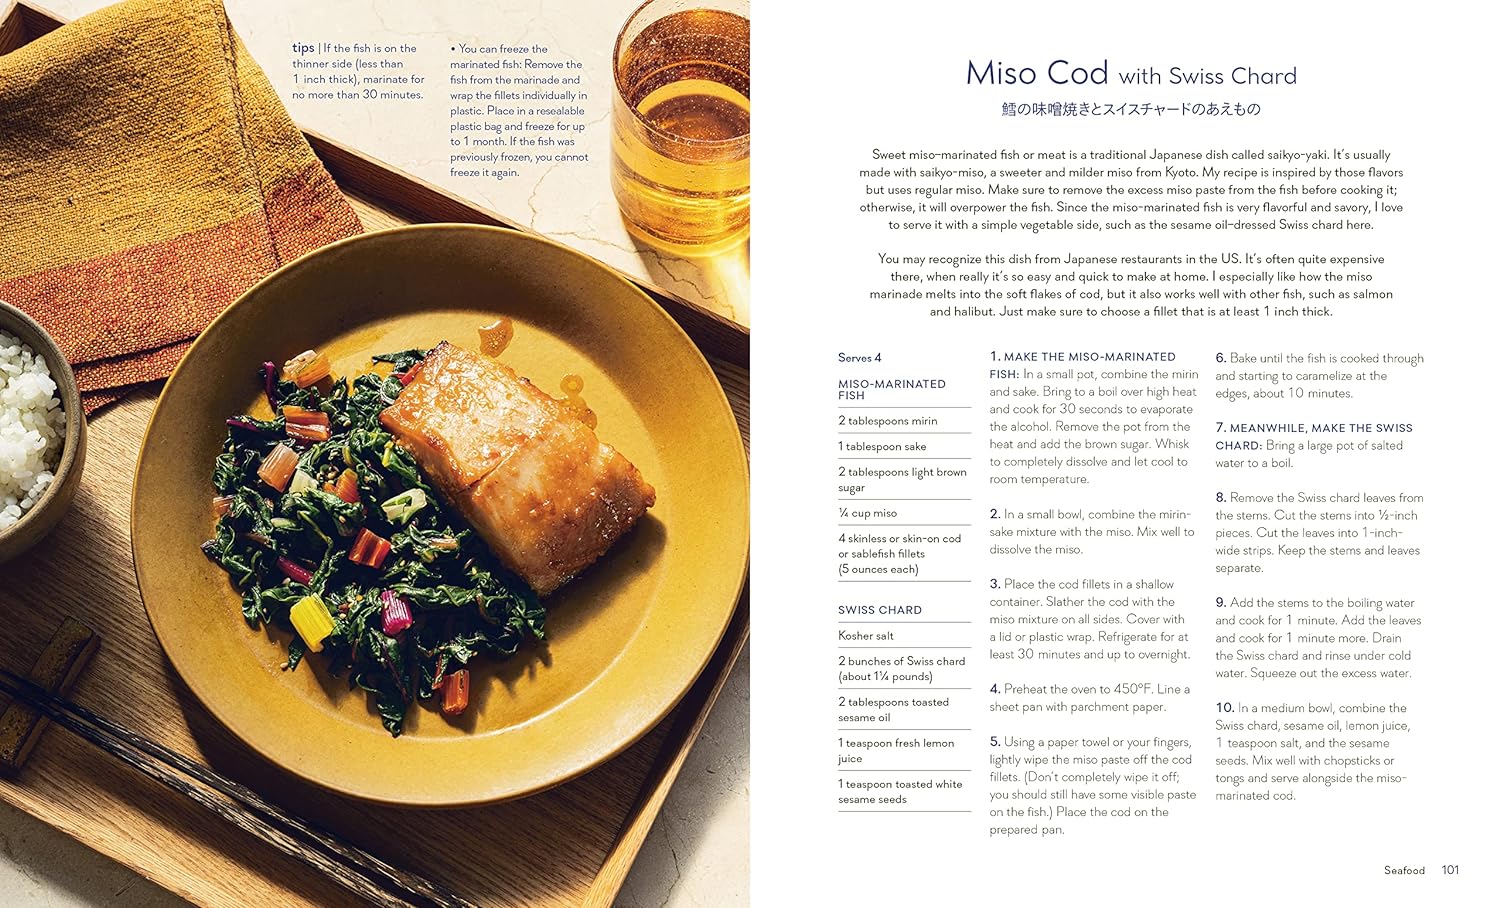 Make It Japanese: Simple Recipes for Everyone: A Cookbook (Rie McClenny and Sanaë Lemoine)